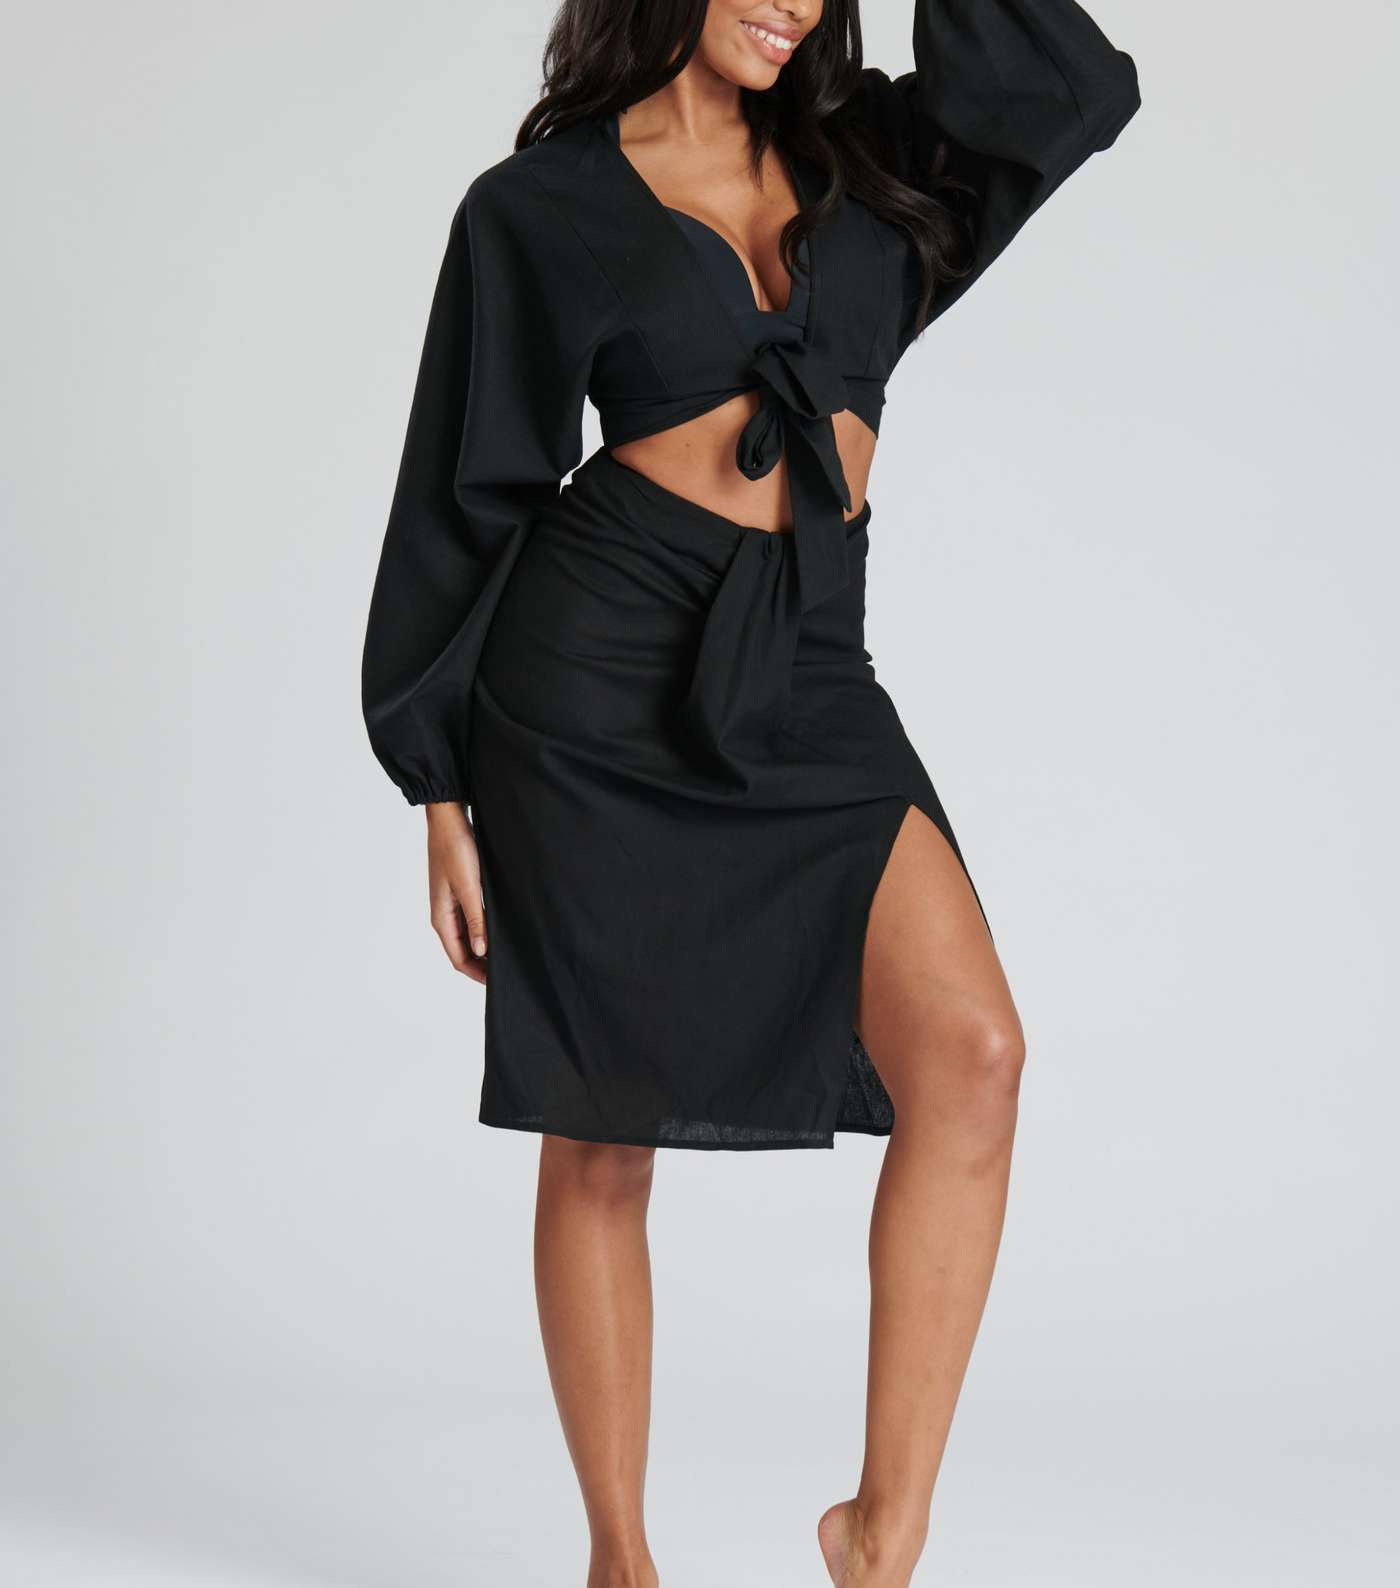 South Beach Black Linen-Look Knot Midi Skirt Image 2